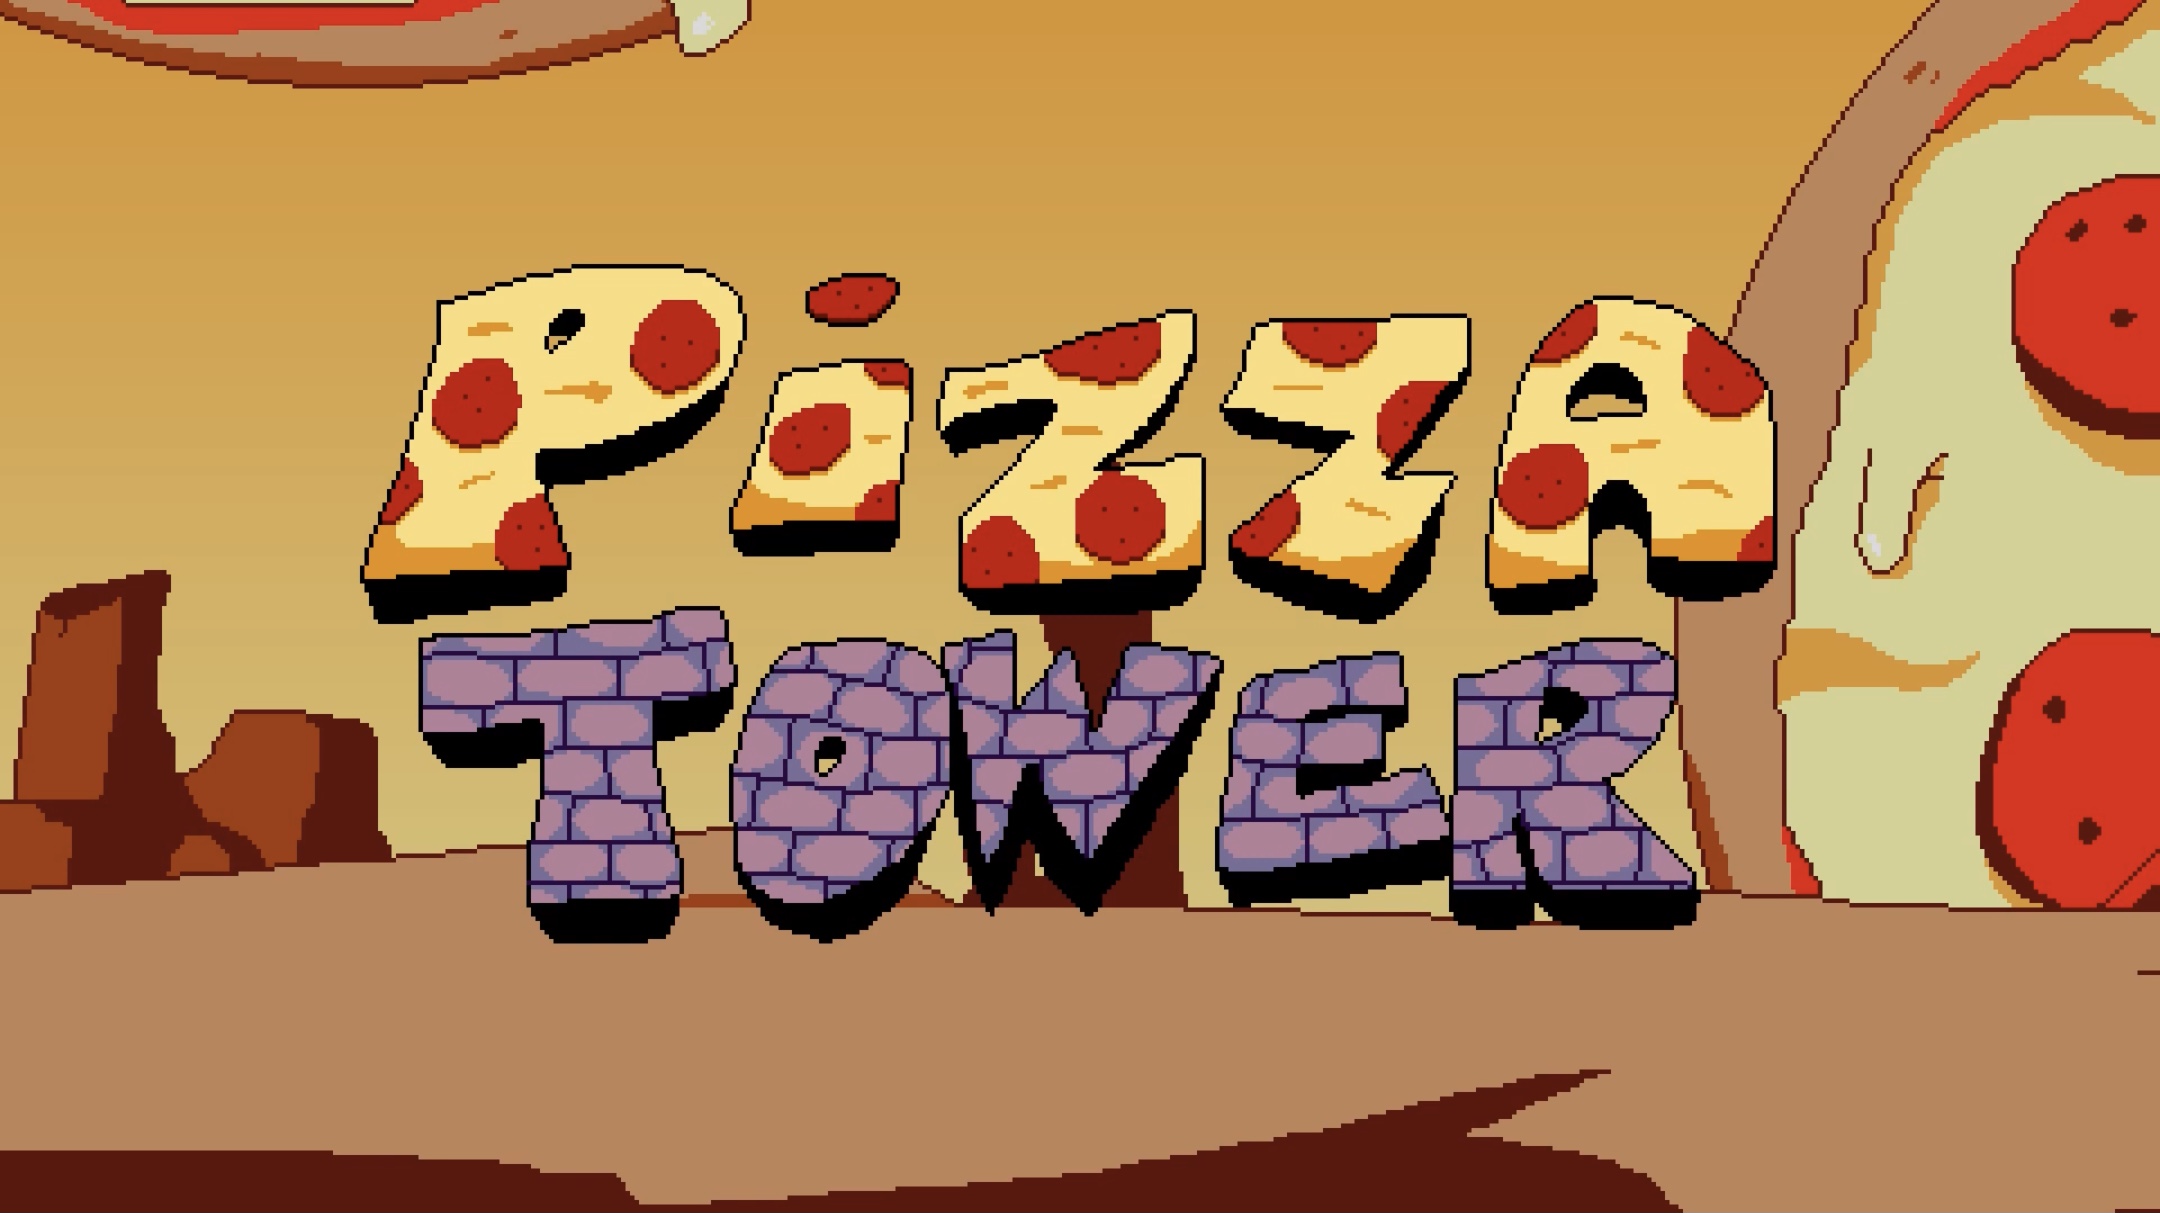 Музыка из пицца тавер. Пизза тавэр. Pizza Tower игра. Игрушки пицца ТАВЕР. Пицца башня.